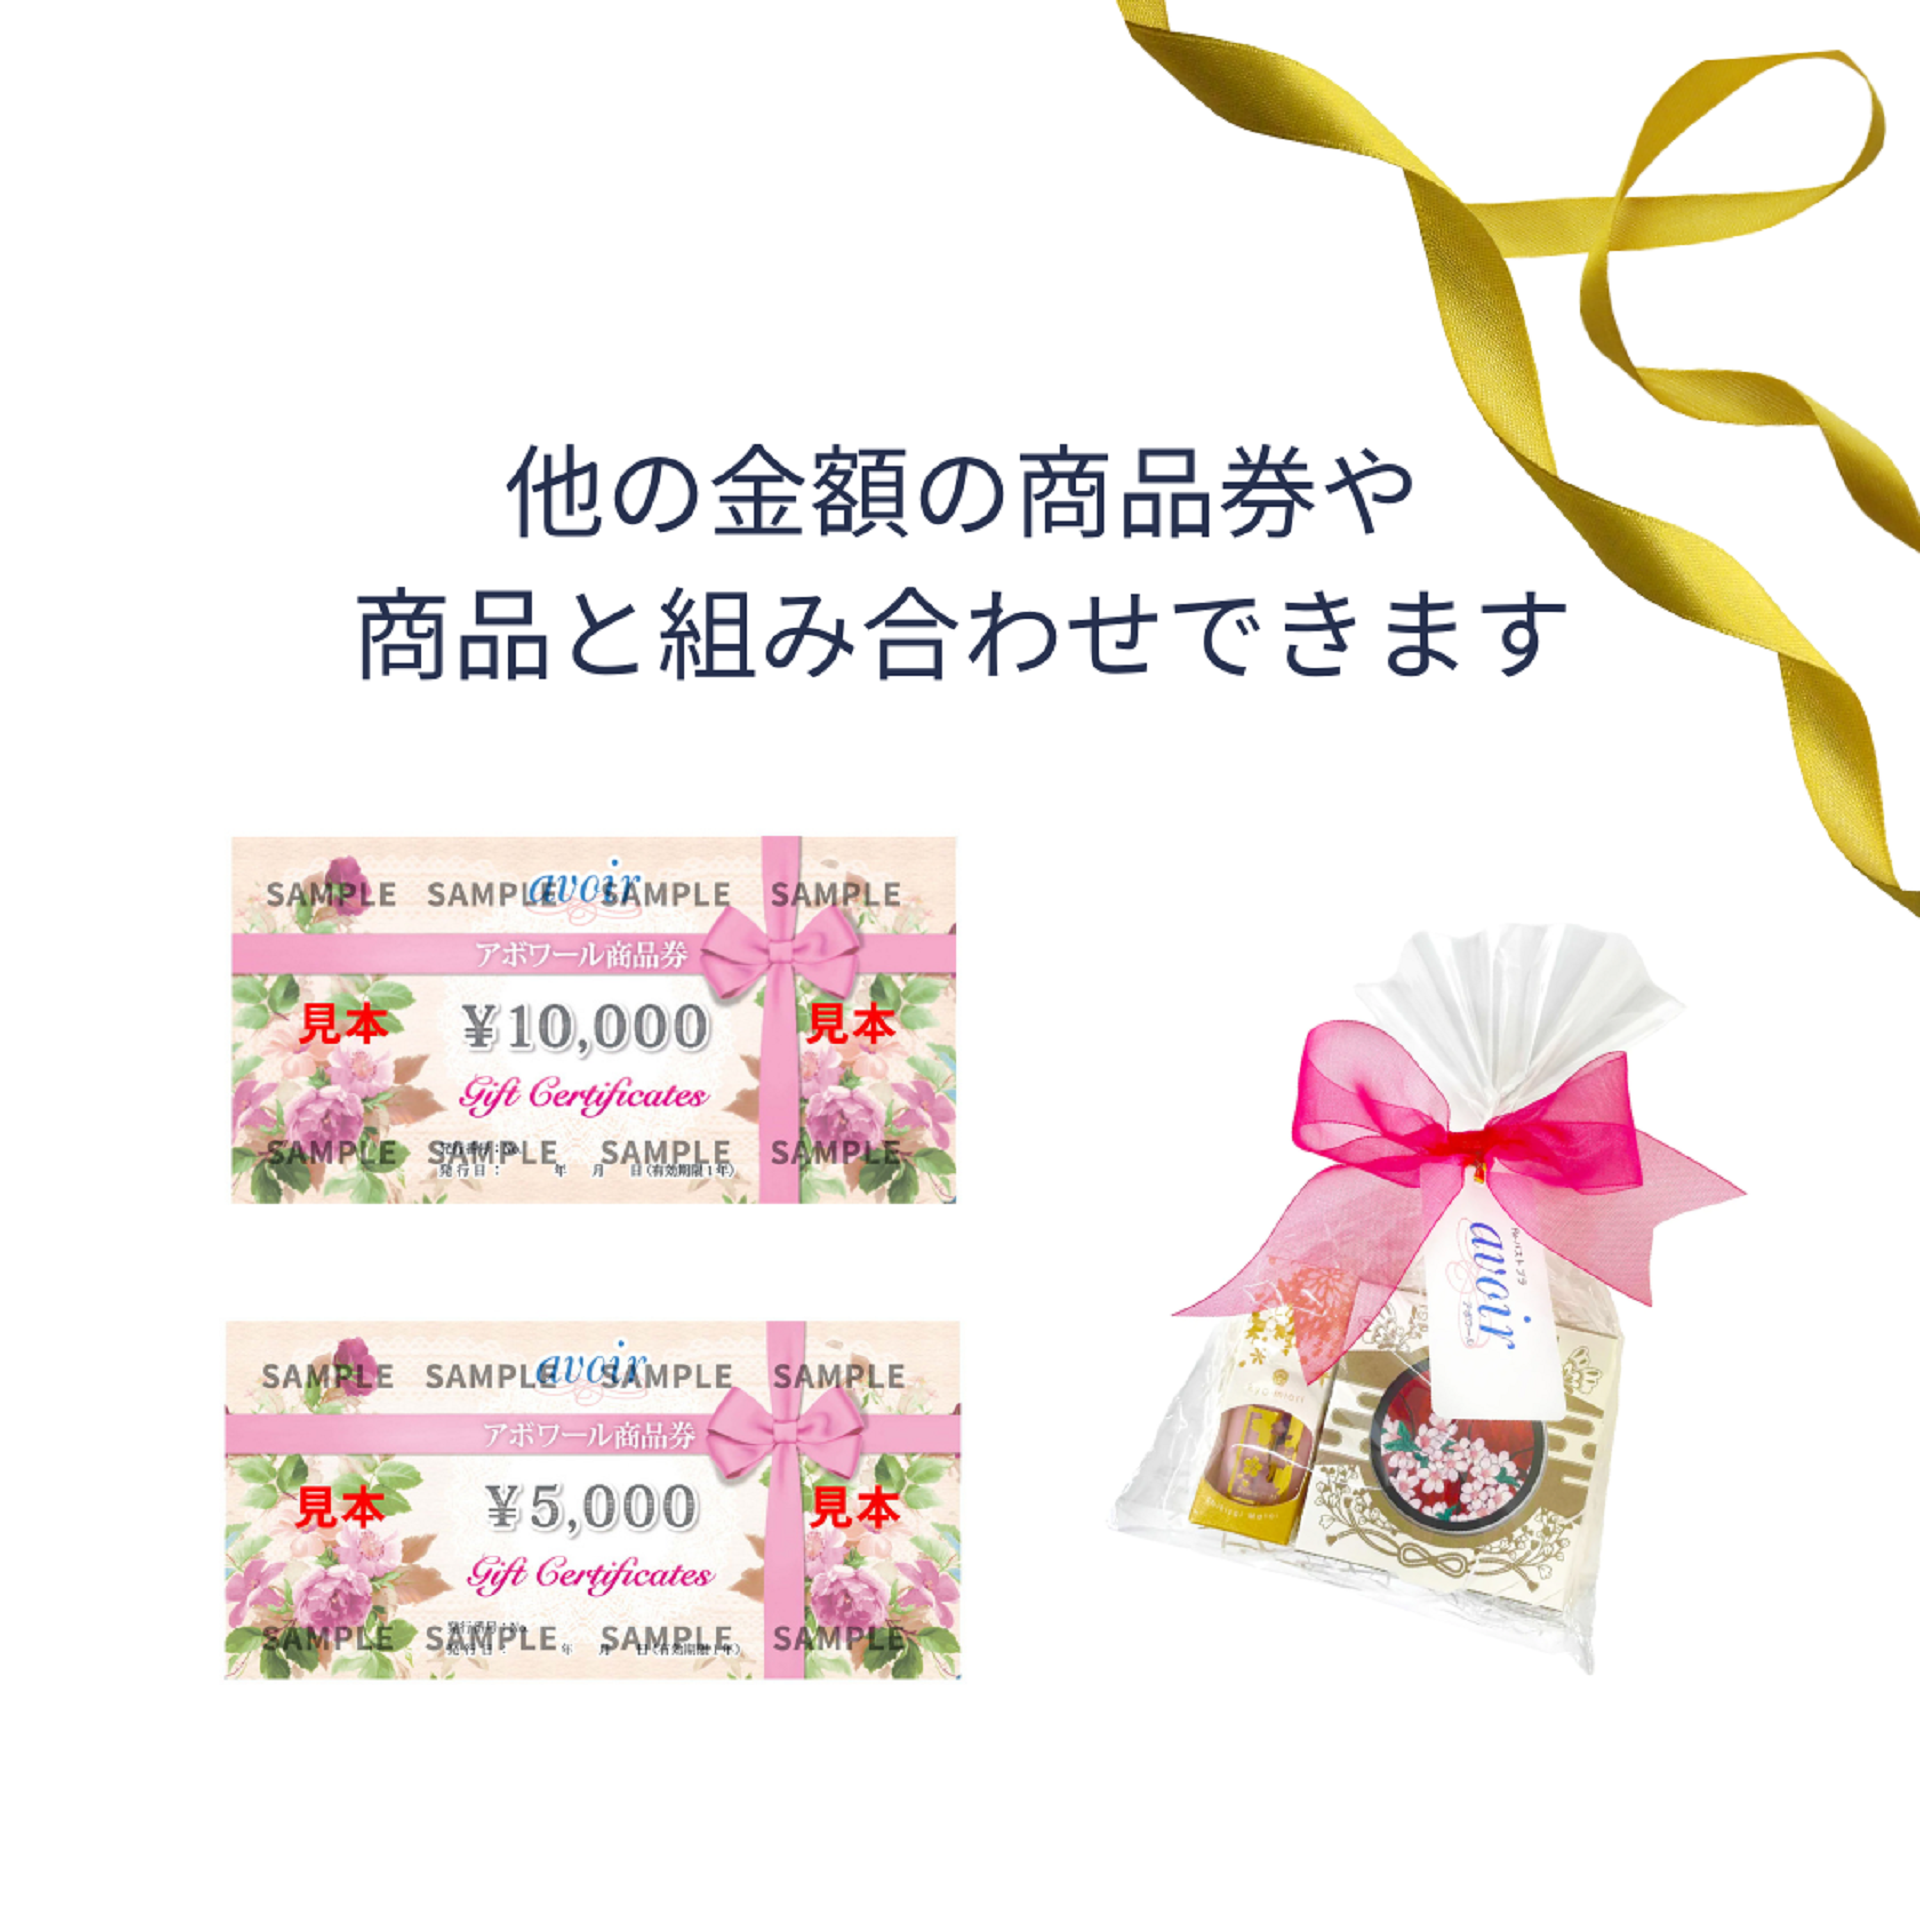 Avoire 5,000 yen gift certificate